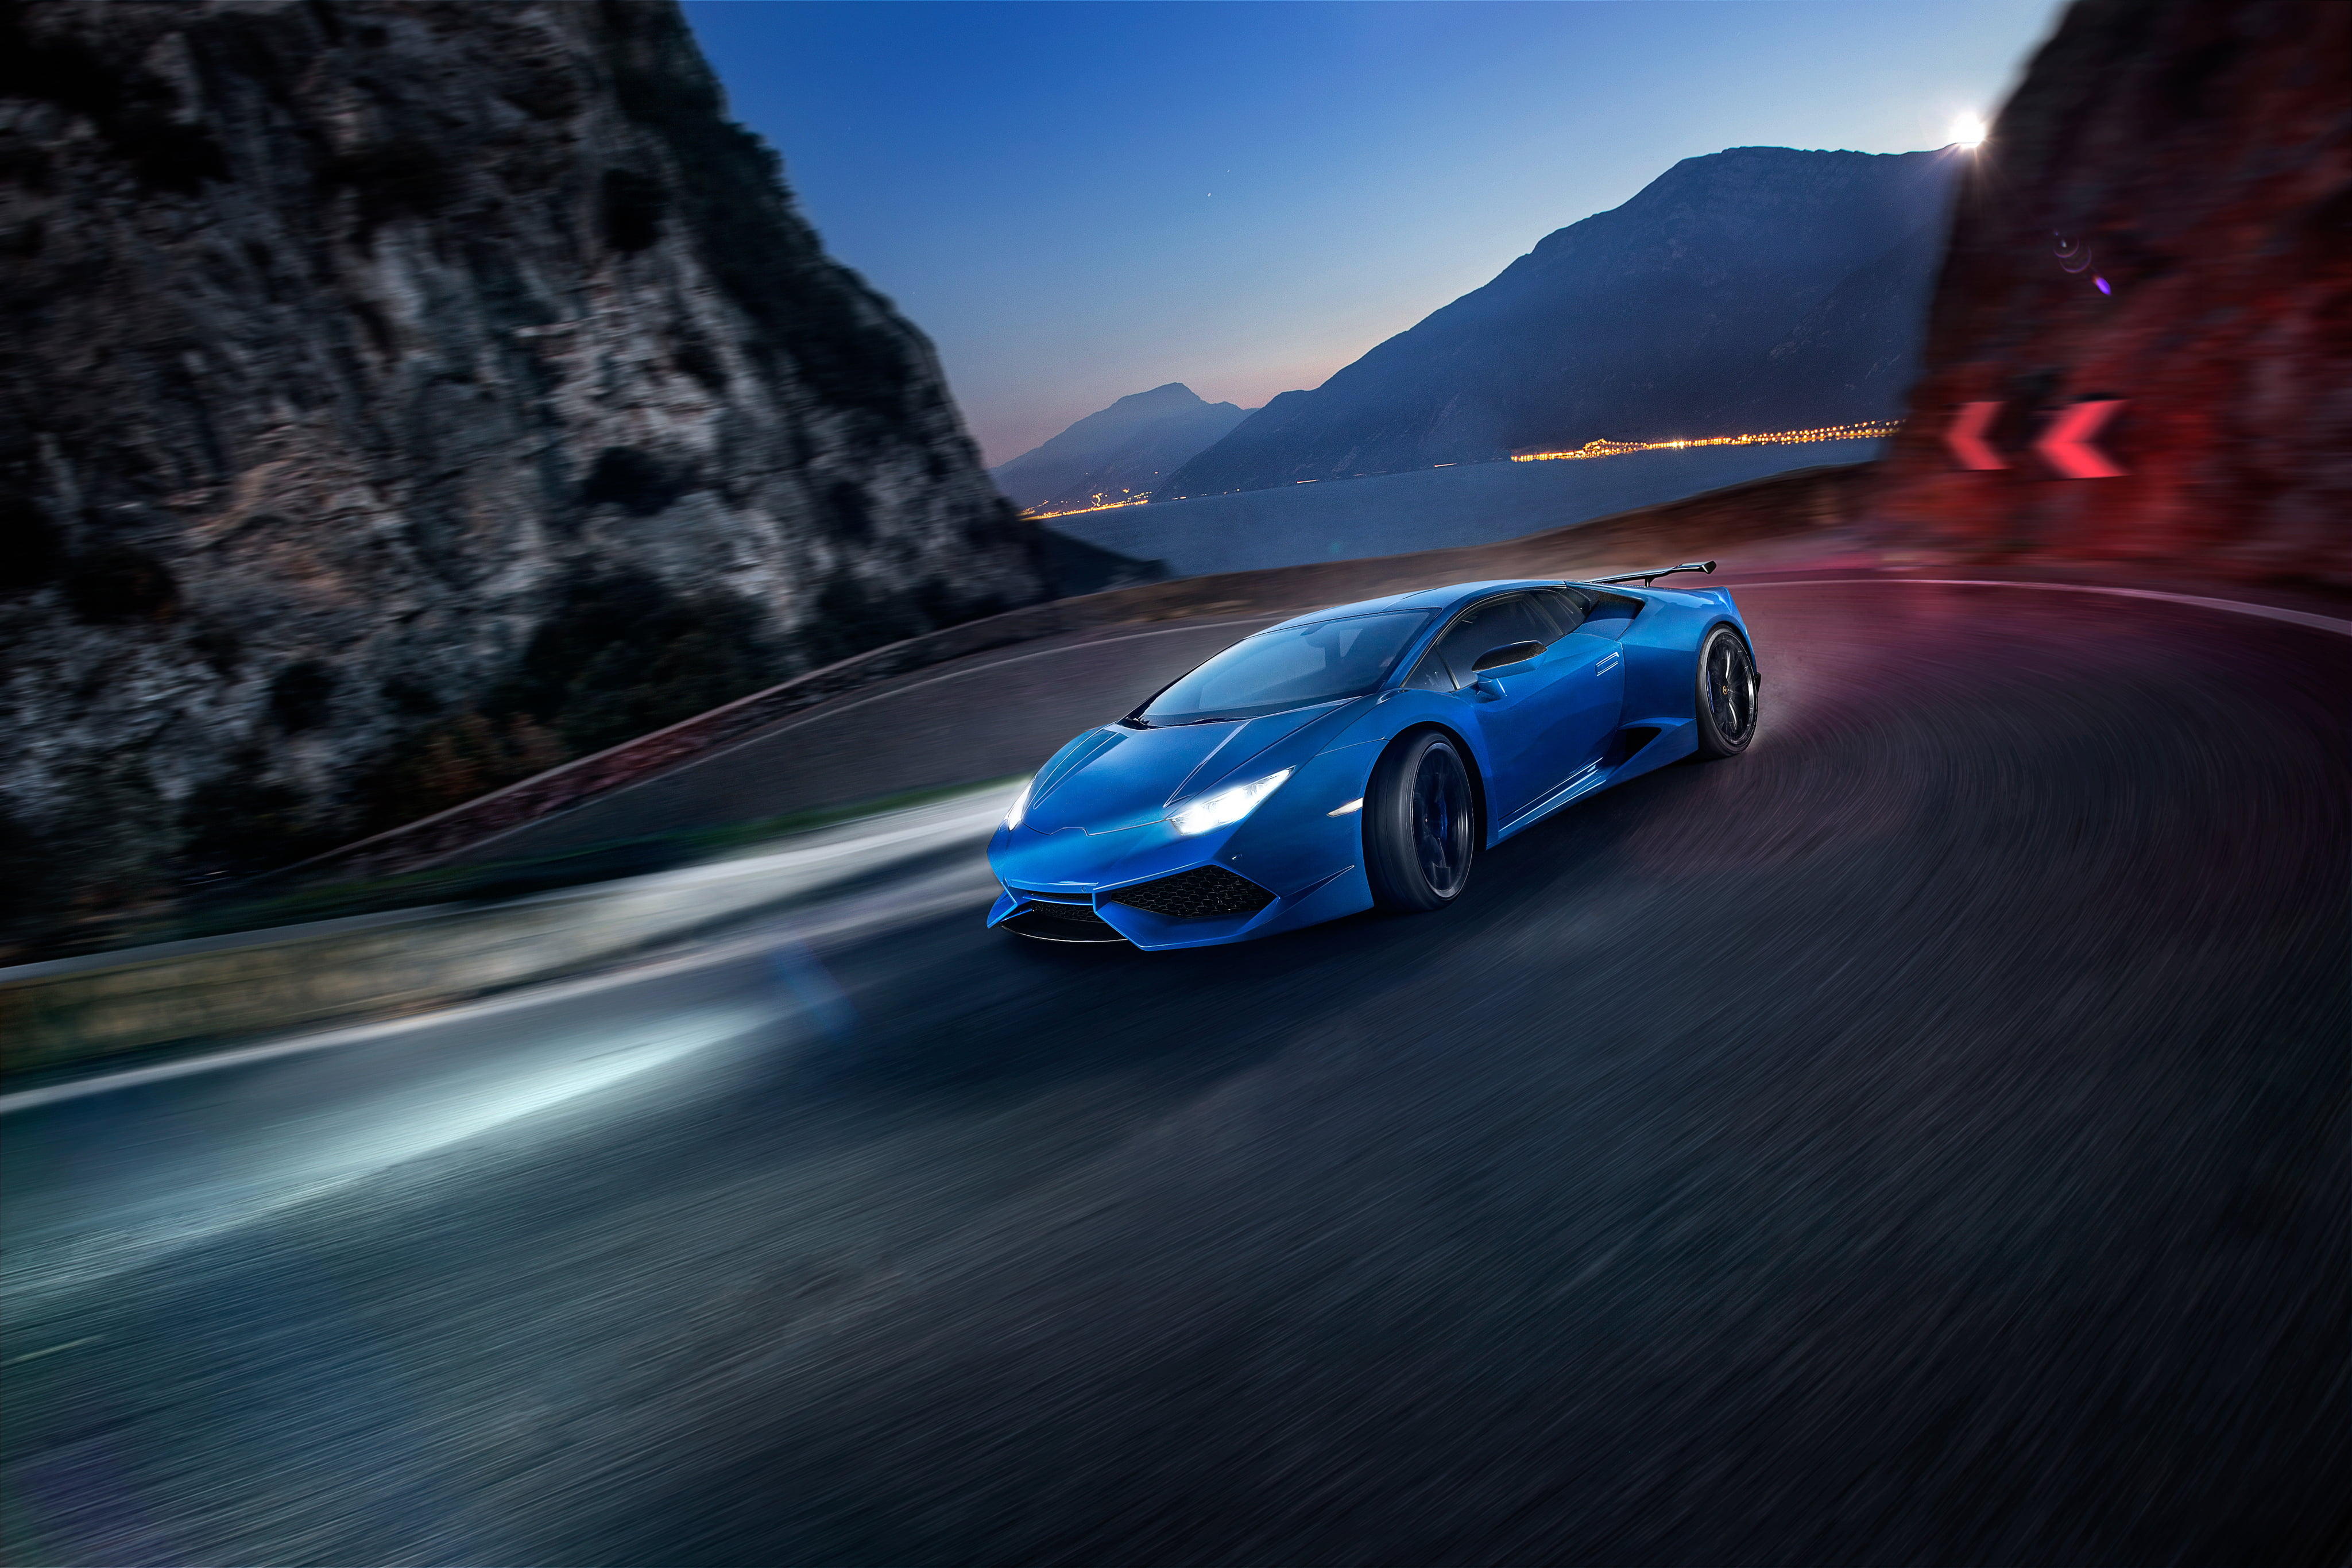 Blue Lamborghini Murcielago drifting on curved road during dusk time